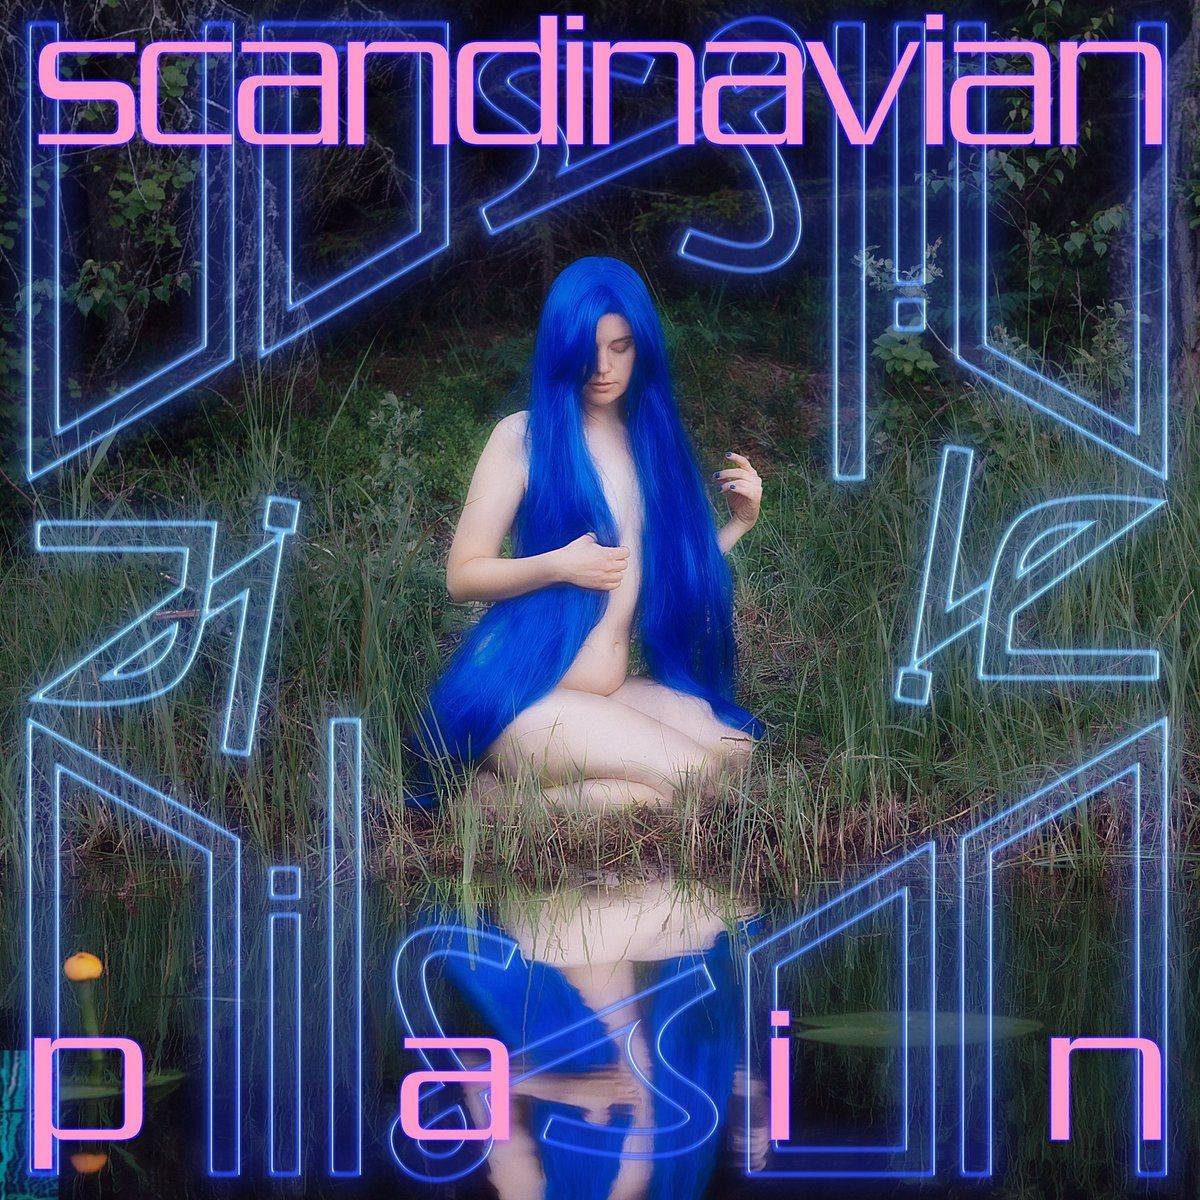 Scandinavian Pain